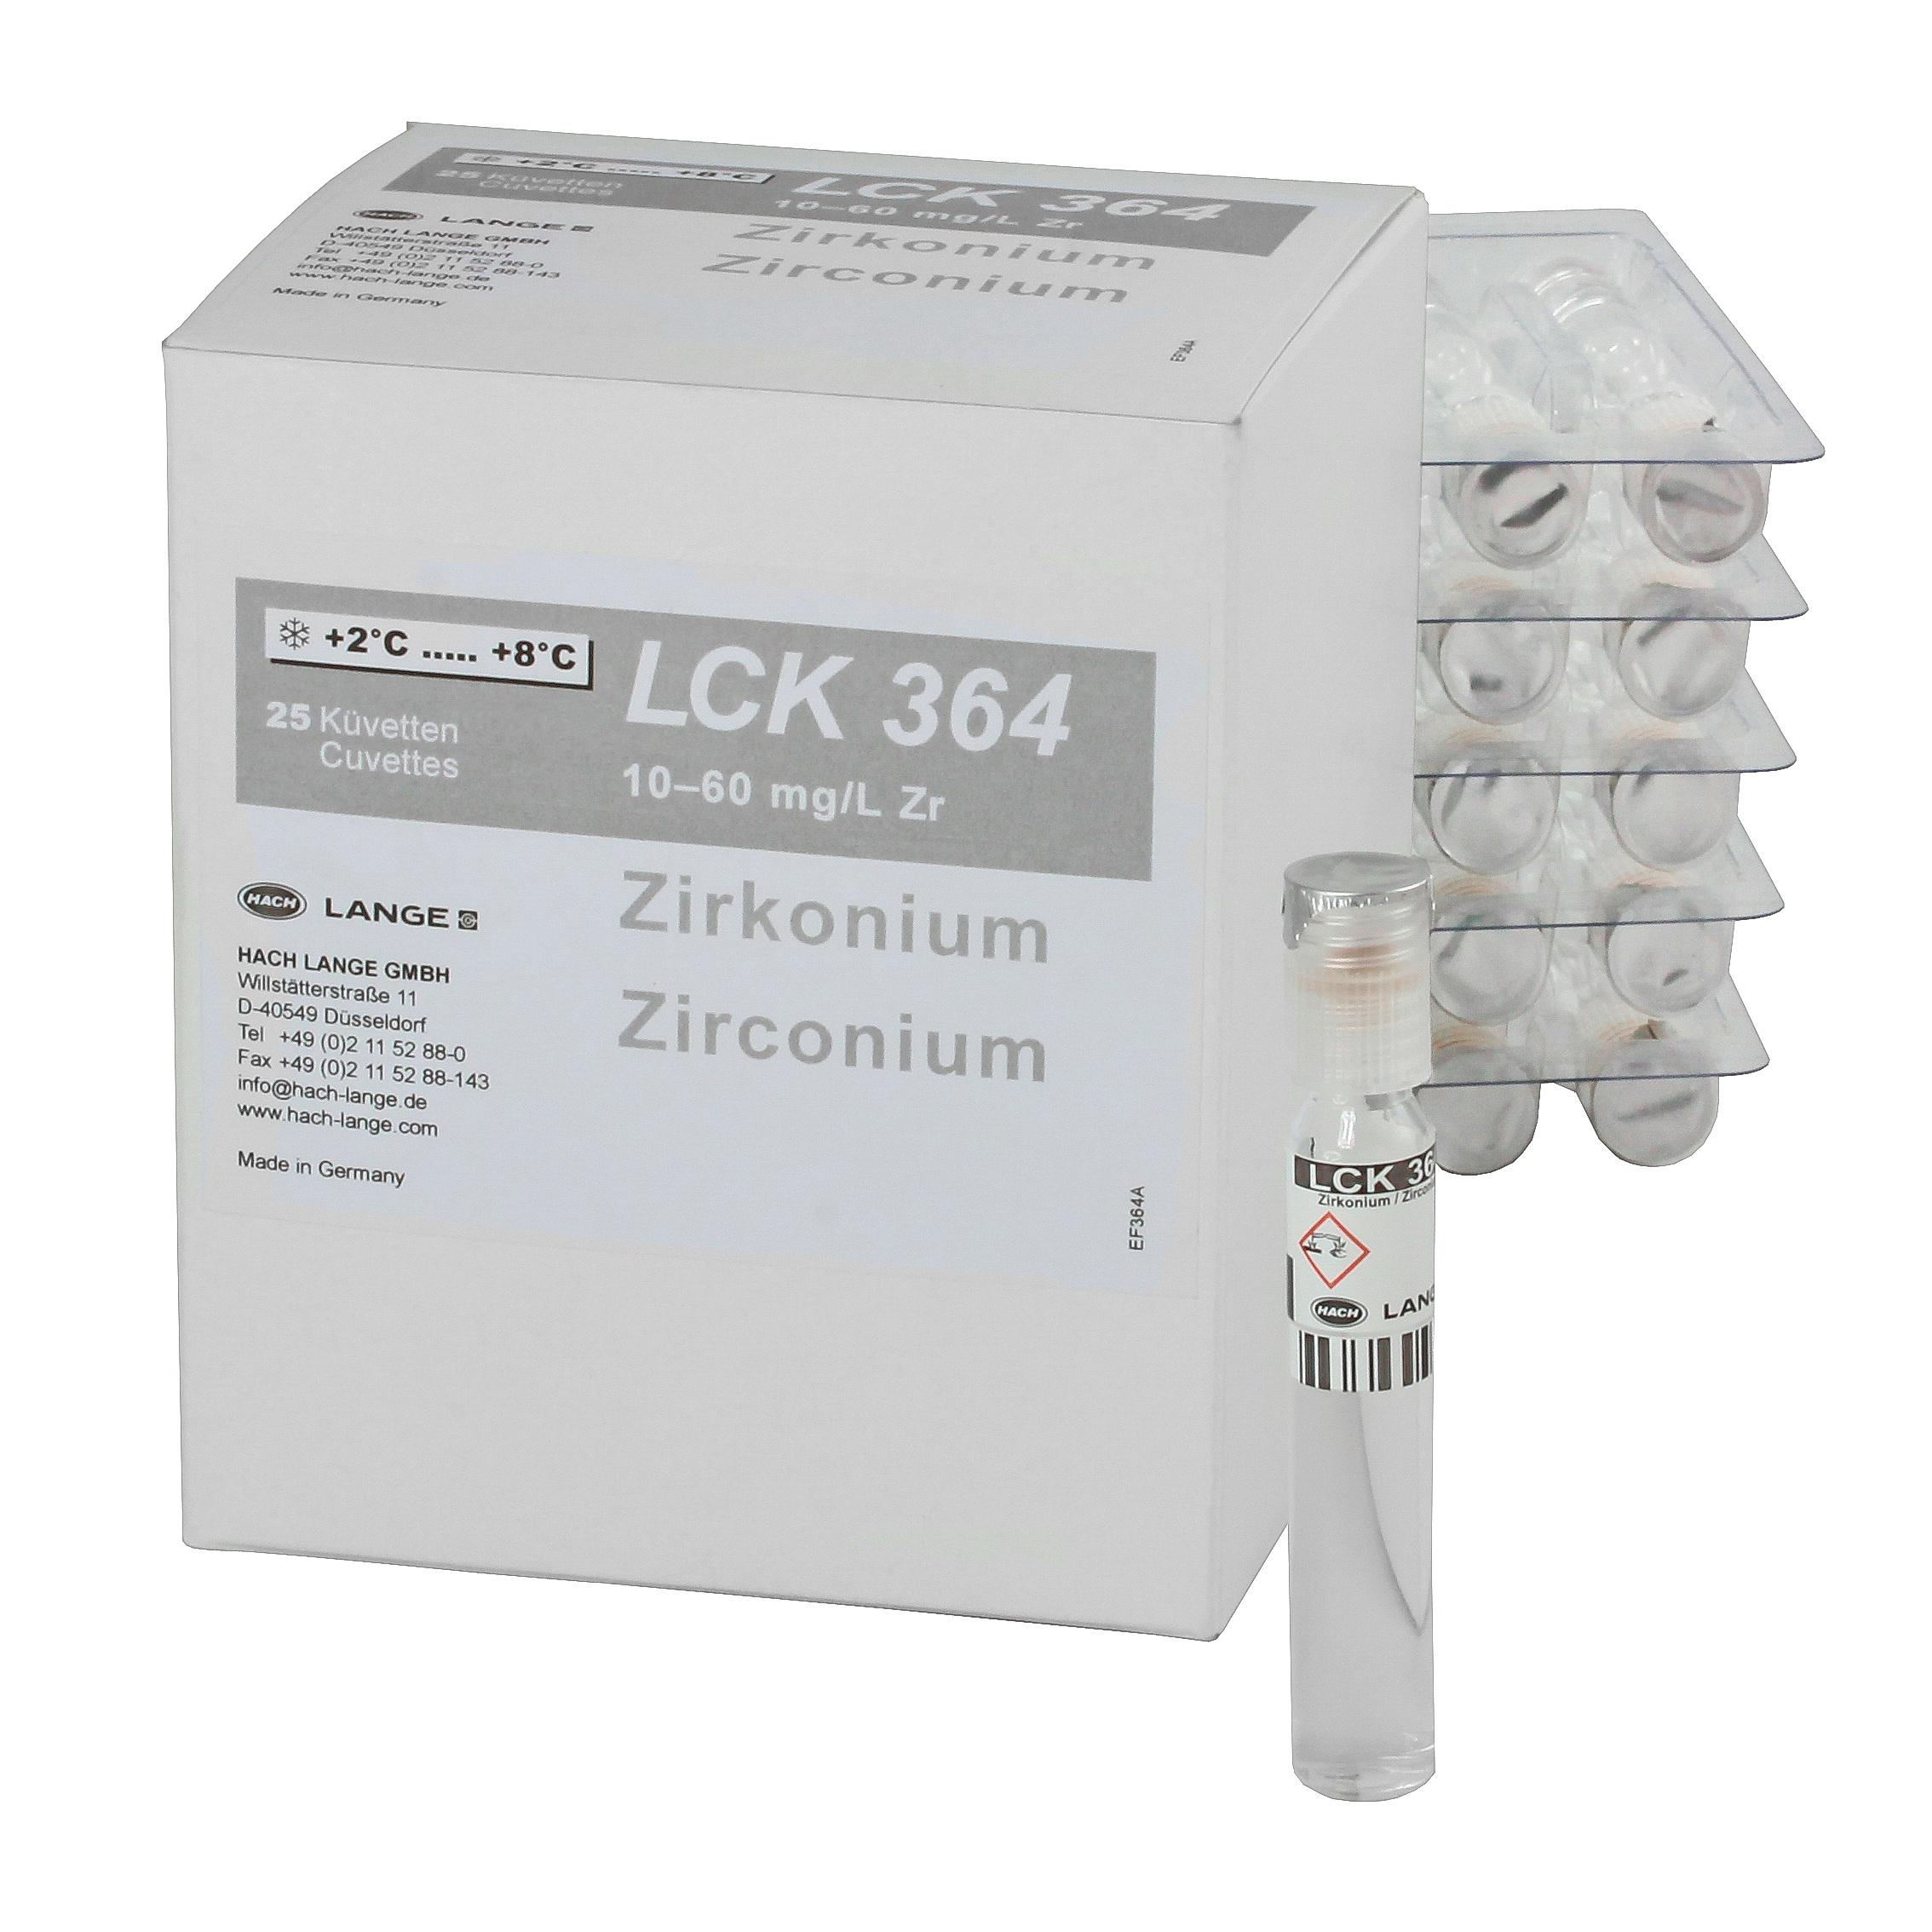 Product Launch LCK364 Zirconium